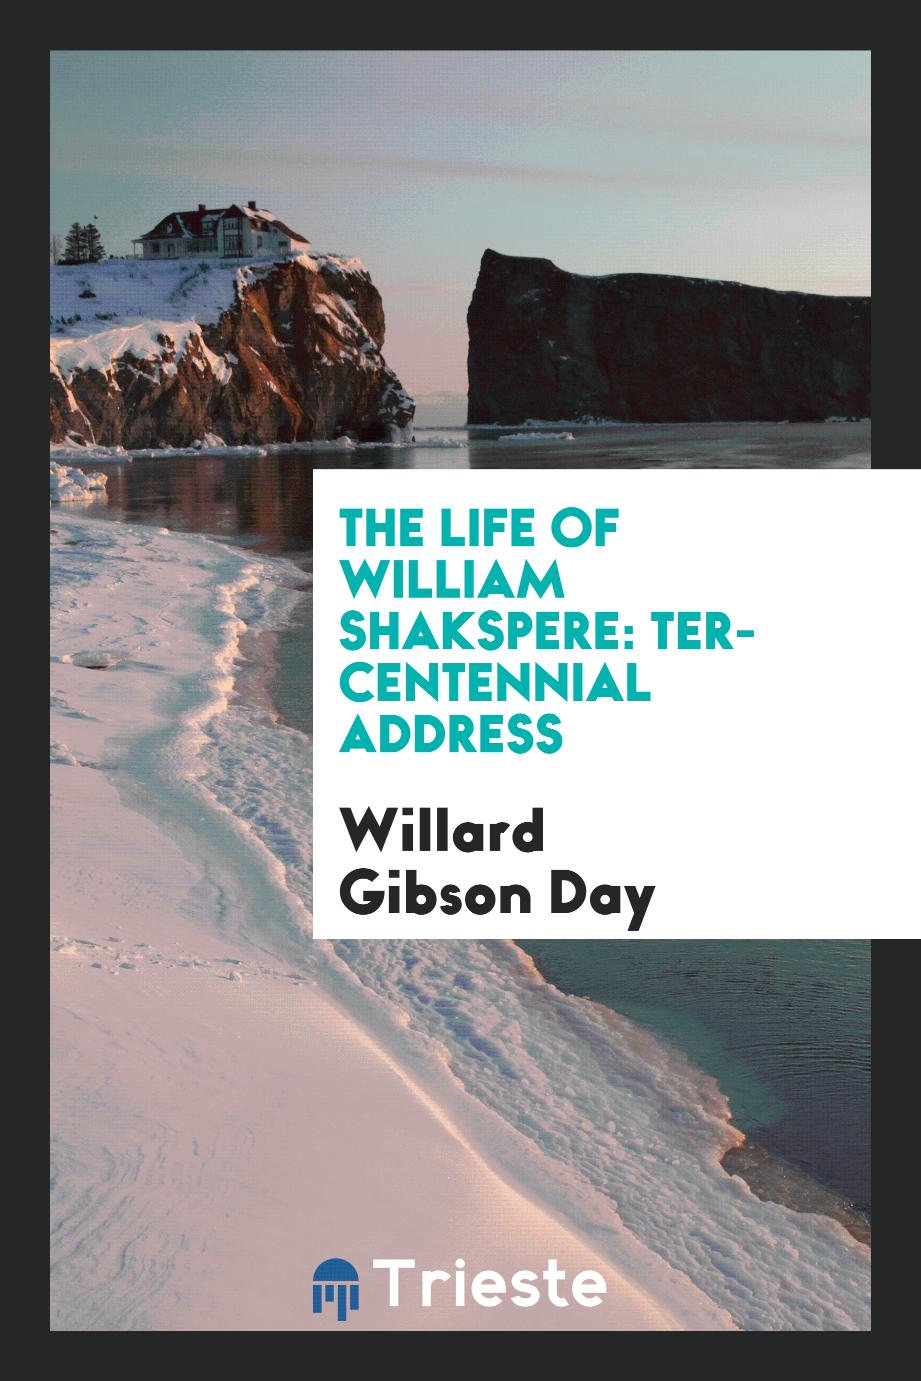 The Life of William Shakspere: Ter-centennial Address